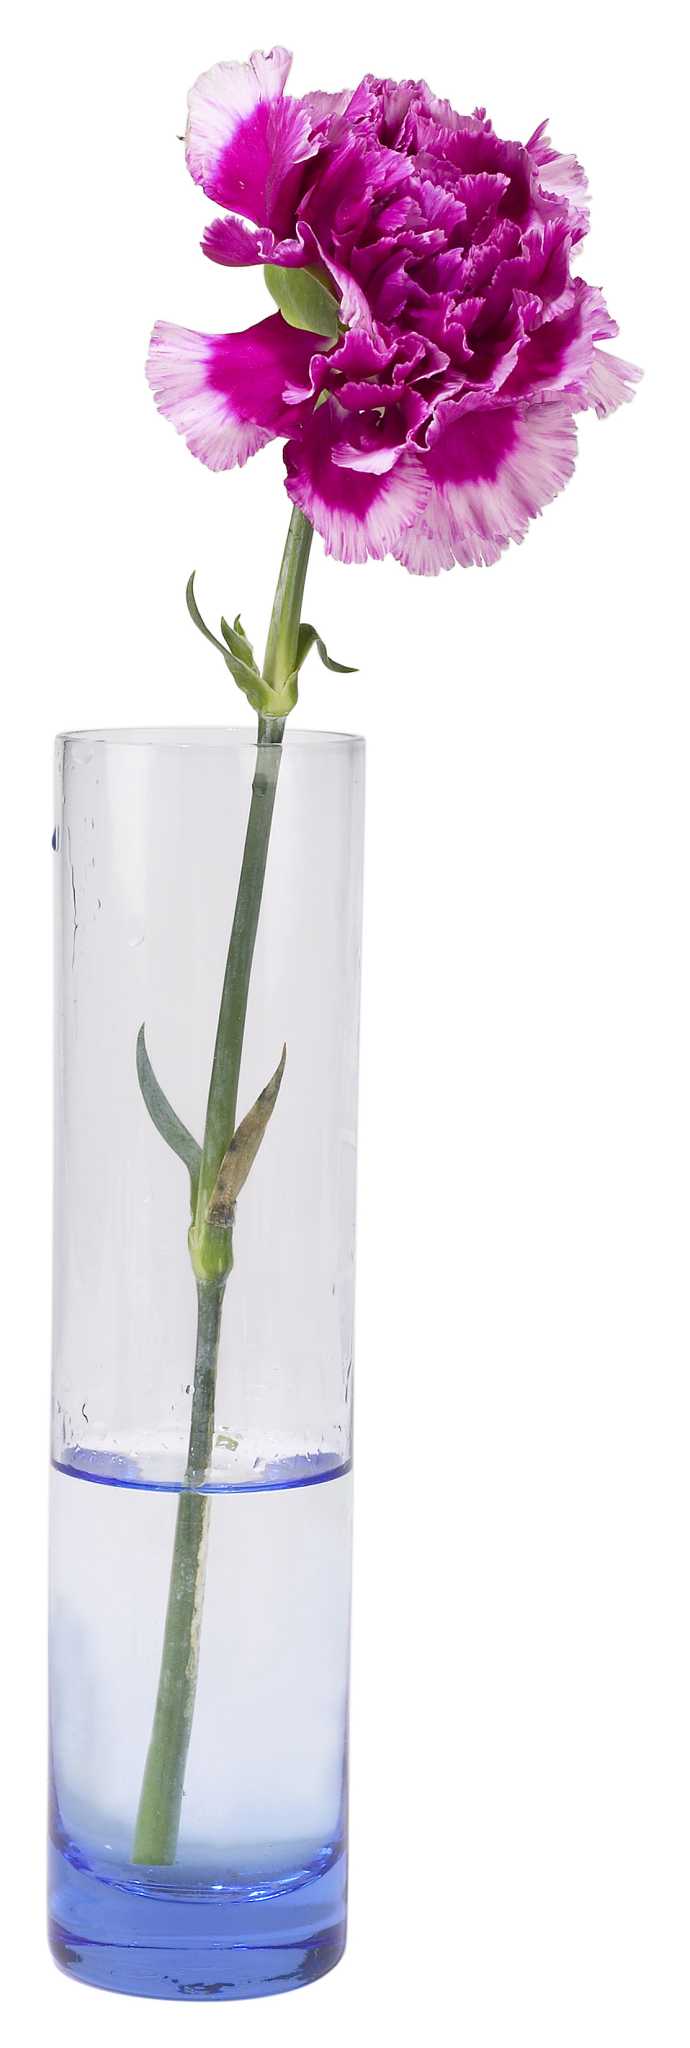 How Does the Everlast Flower Preservation Kit Work?